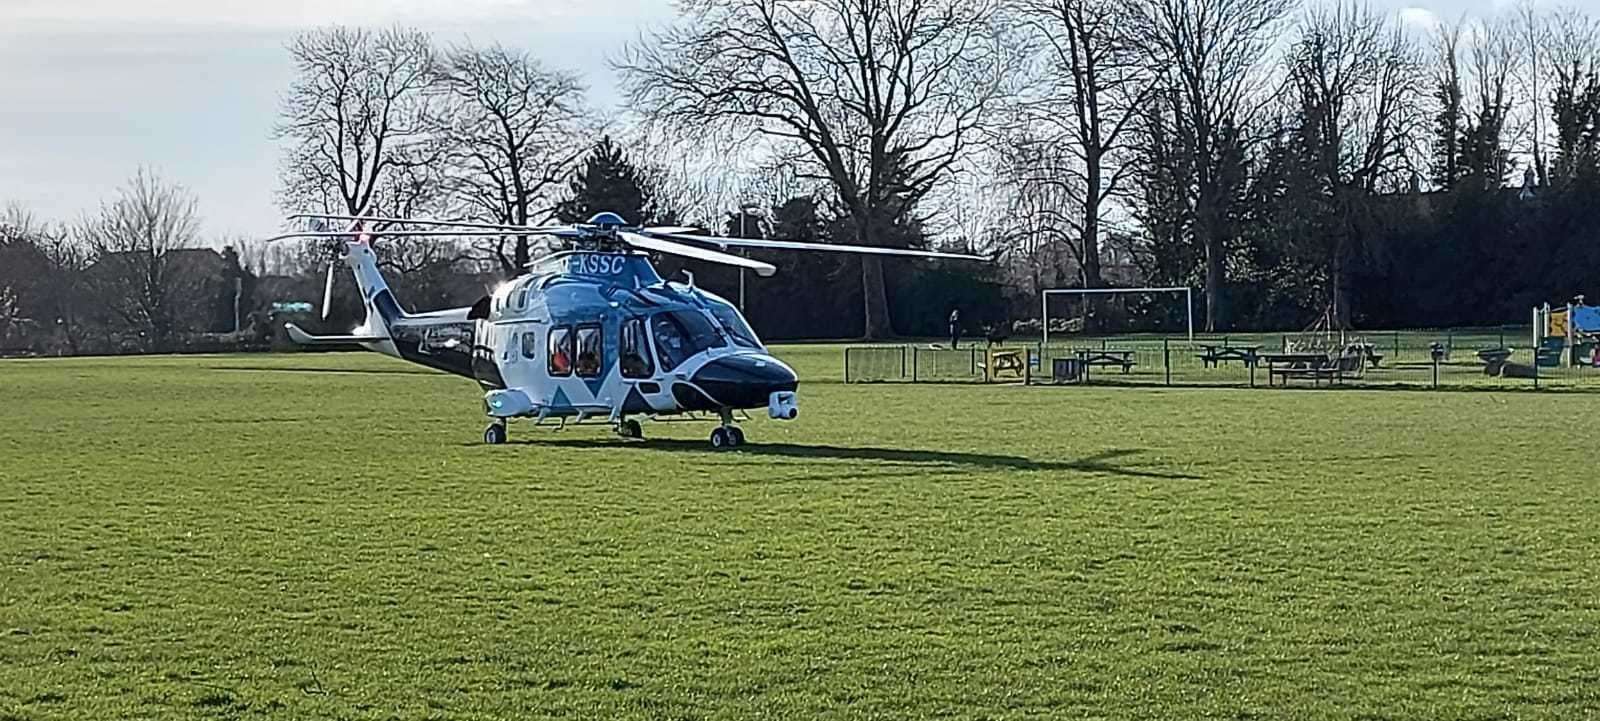 The air ambulance at Rainham Recreation Ground